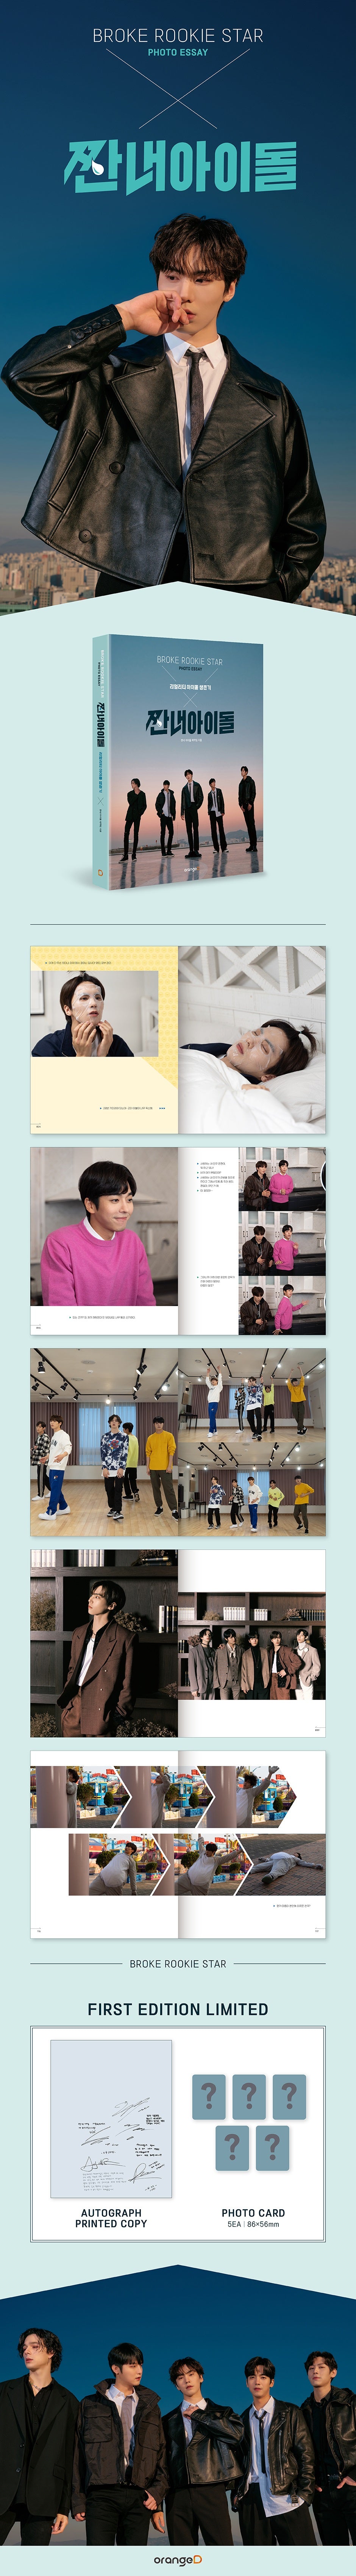 [PRE-ORDER] BROKE ROOKIE STAR PHOTO ESSAY 짠내아이돌 photo book south korea ott drama idol kpop store shop giveaway